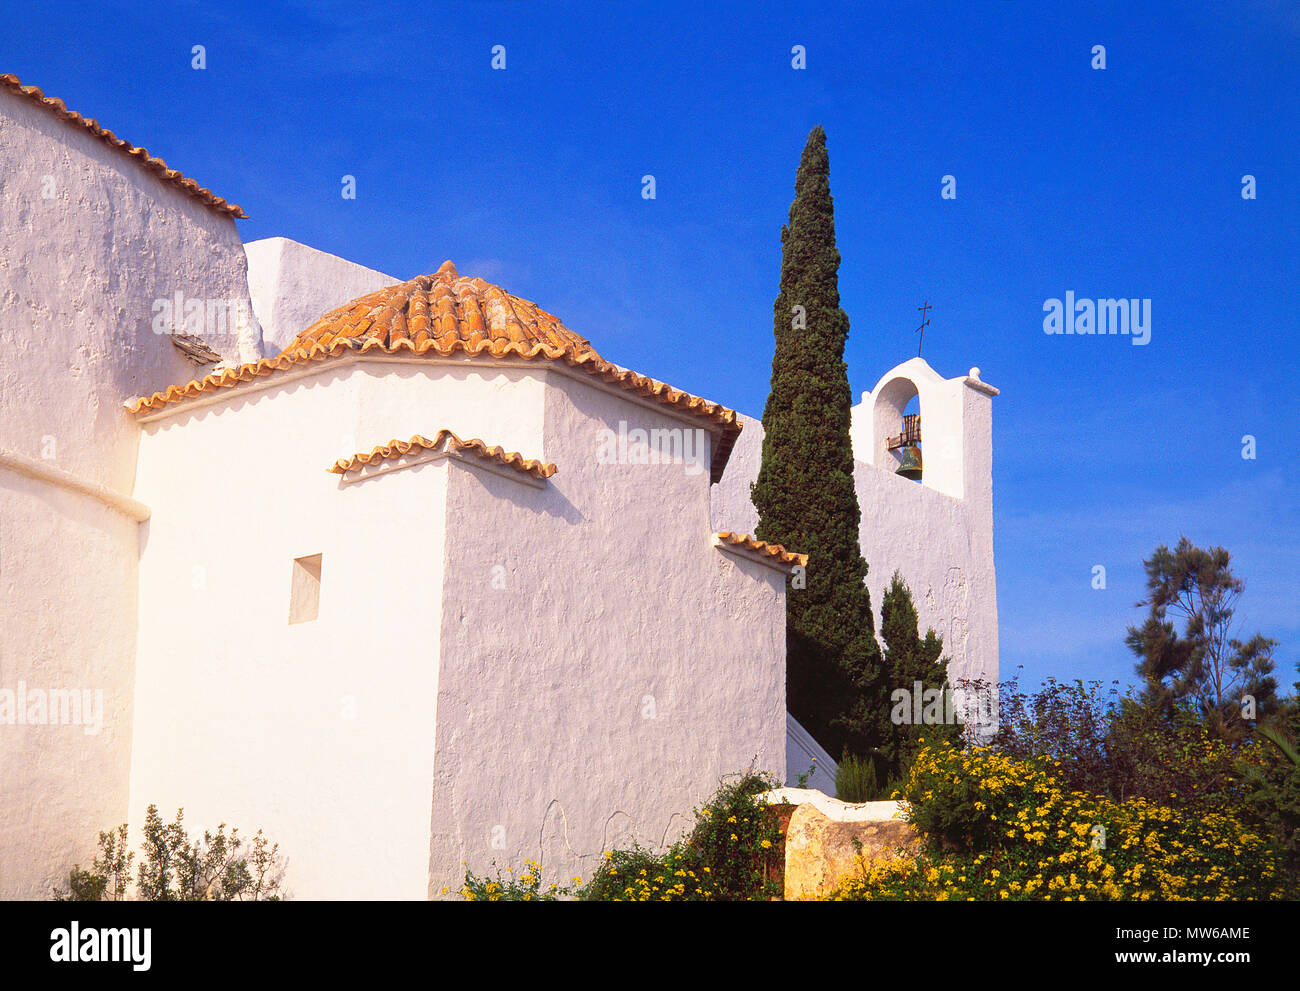 Chapel. Puig de Missa, Santa Eularia des Riu, Ibiza, Balearic Islands, Spain. Stock Photo